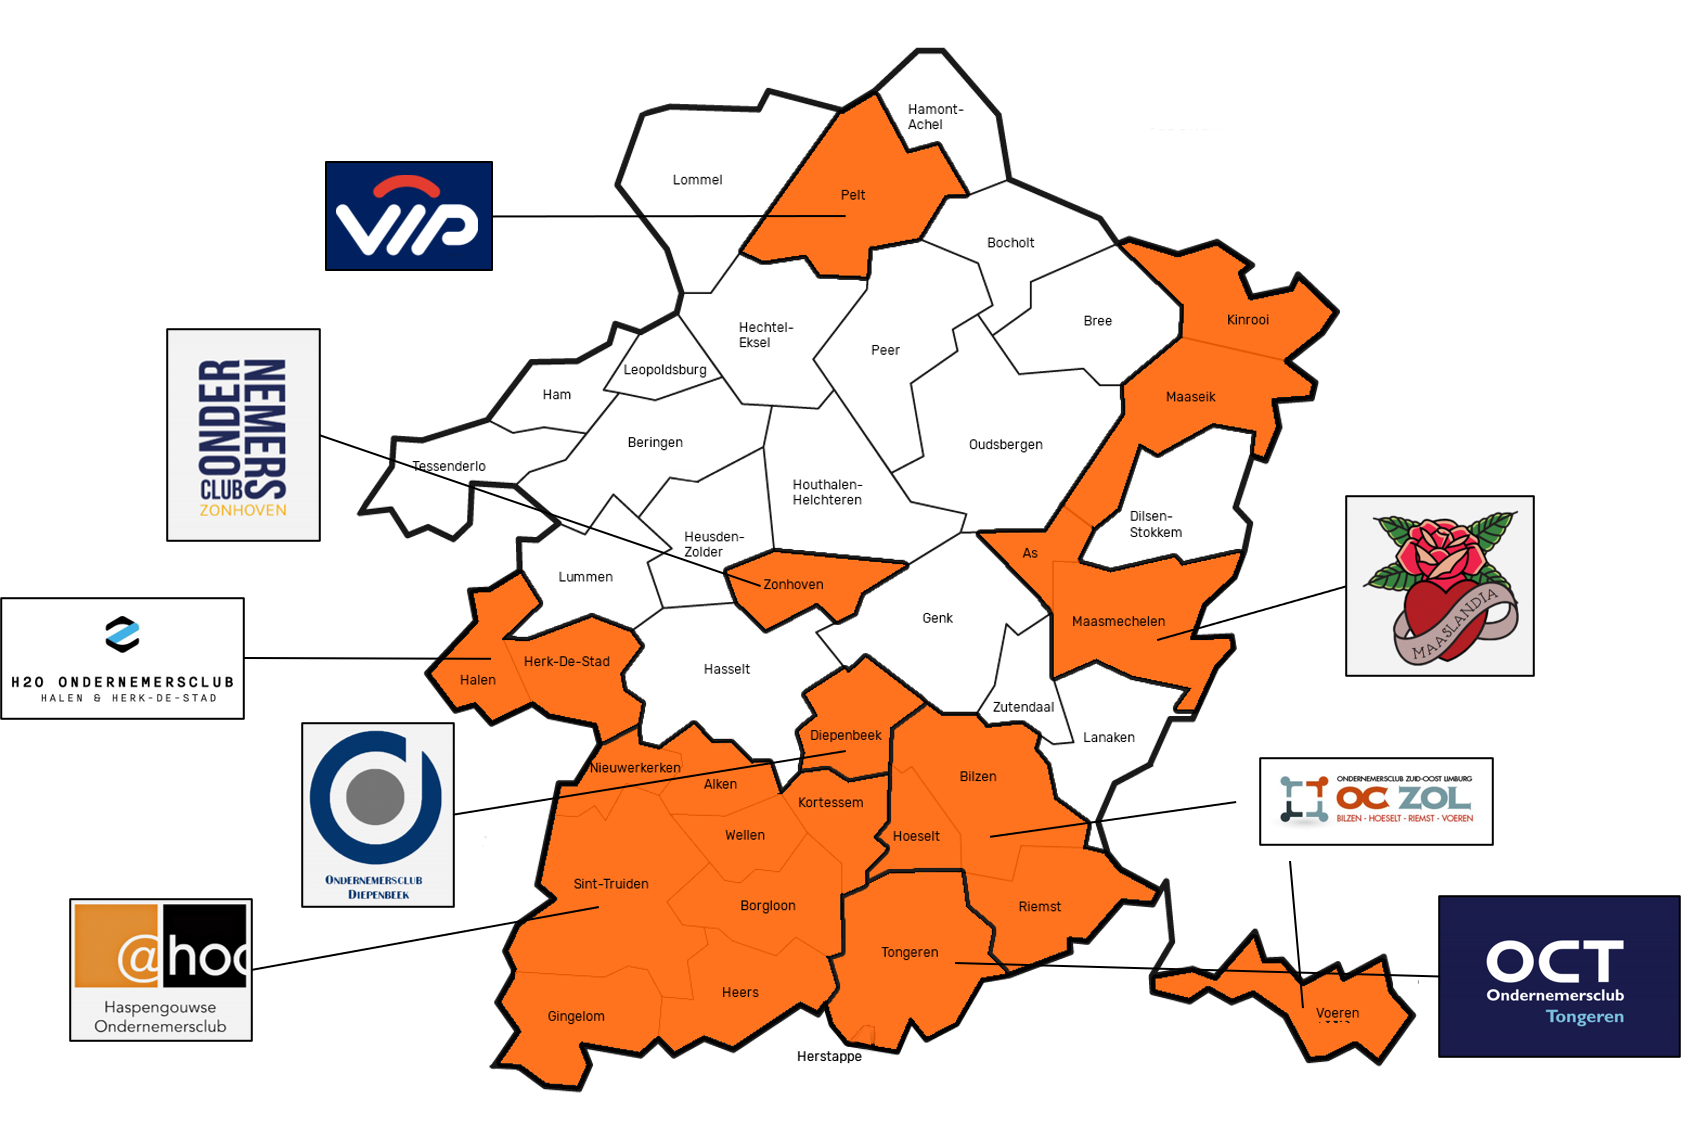 Ondernemersclubs in Limburg